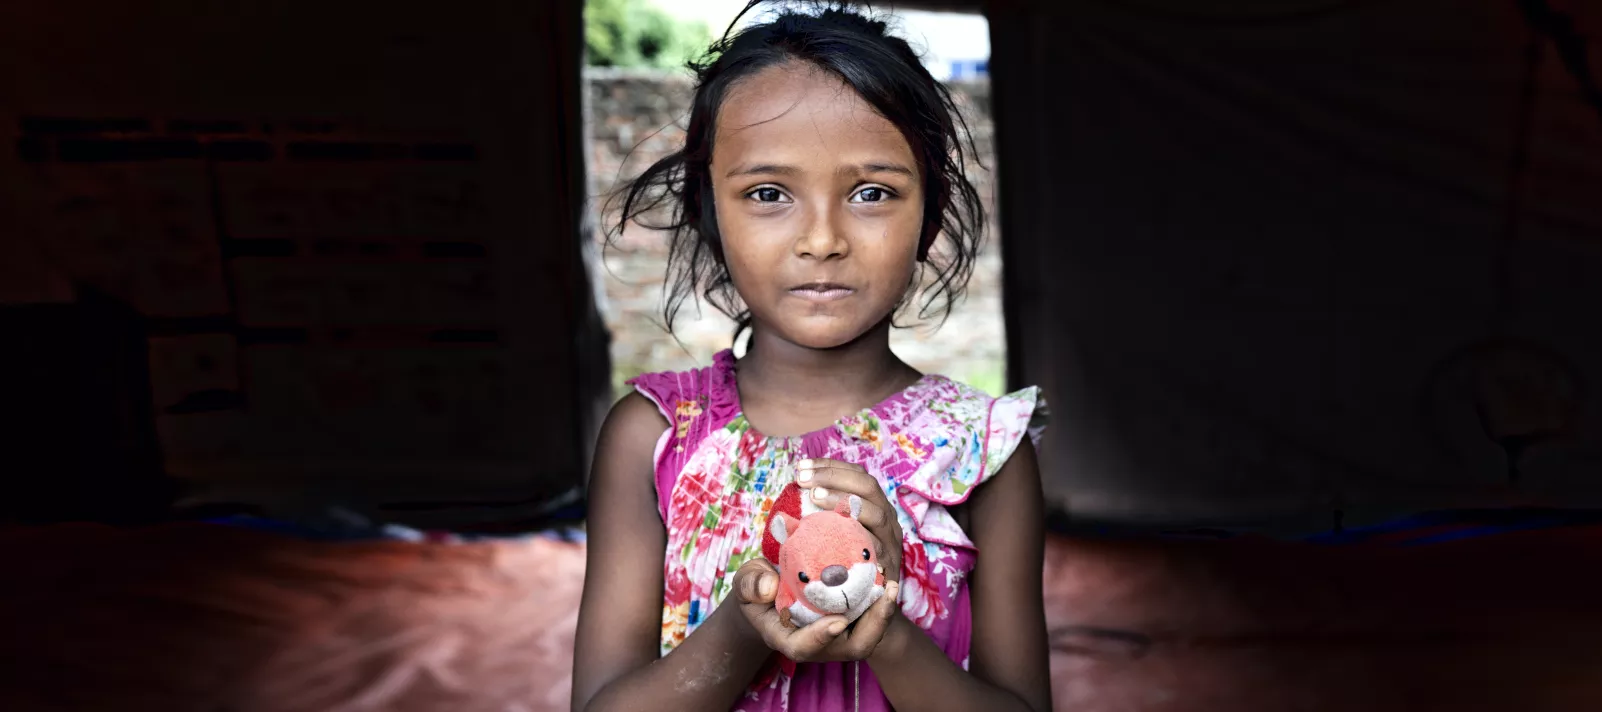 A Bangladeshi child